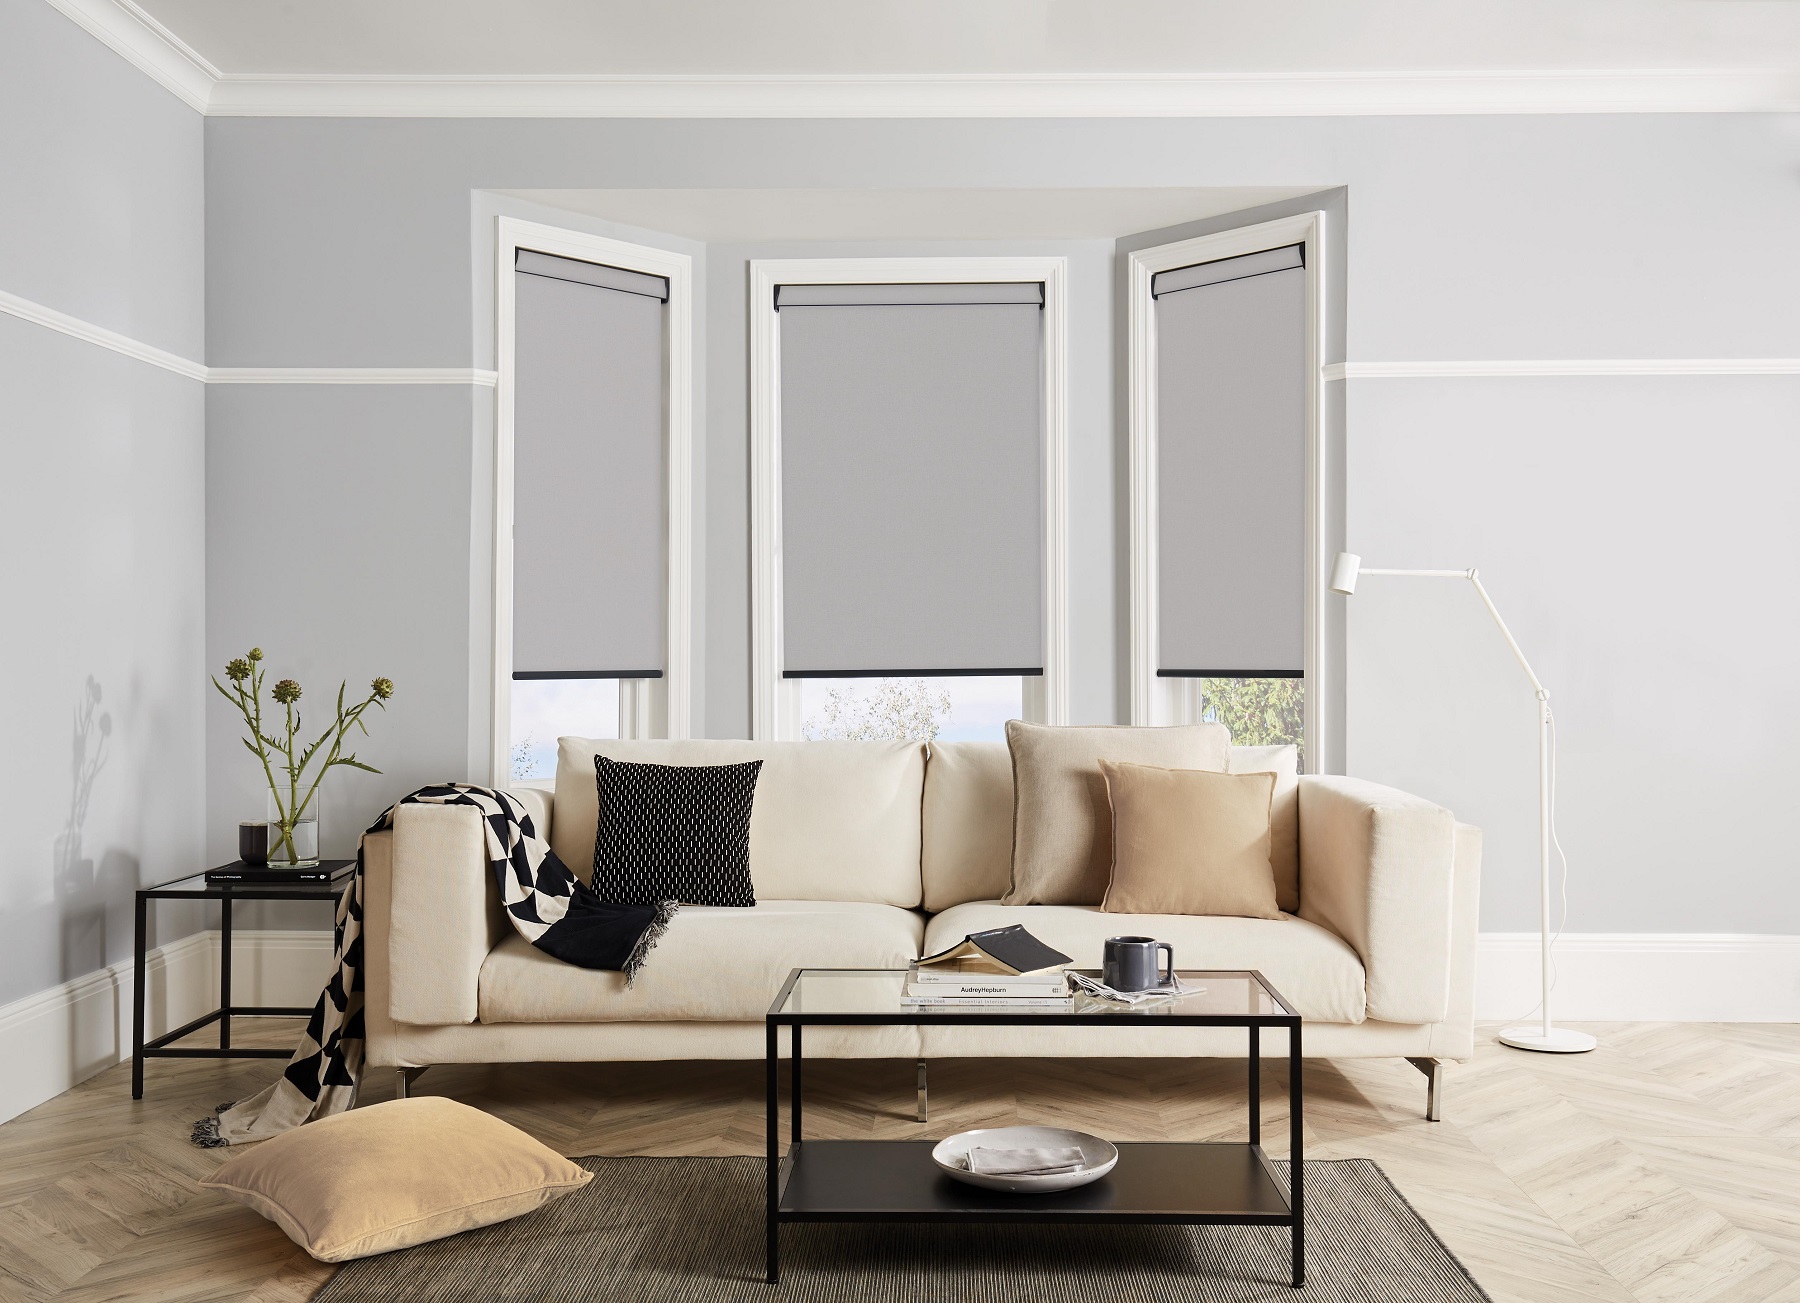 Modern living room with smart blinds